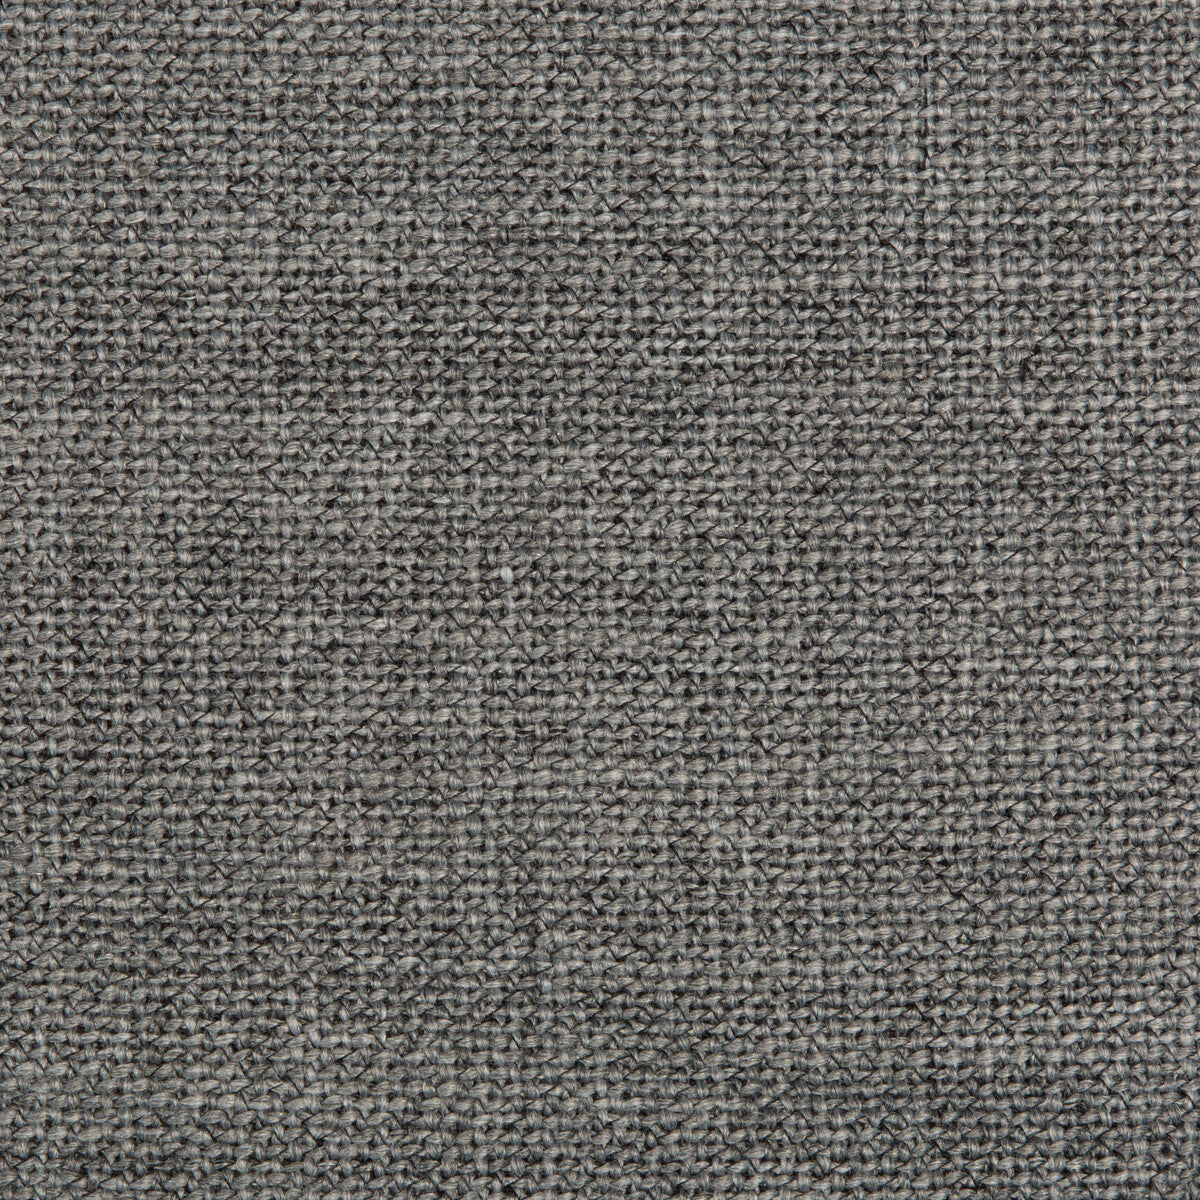 Kravet Smart fabric in 35379-2111 color - pattern 35379.2111.0 - by Kravet Smart in the Performance Kravetarmor collection